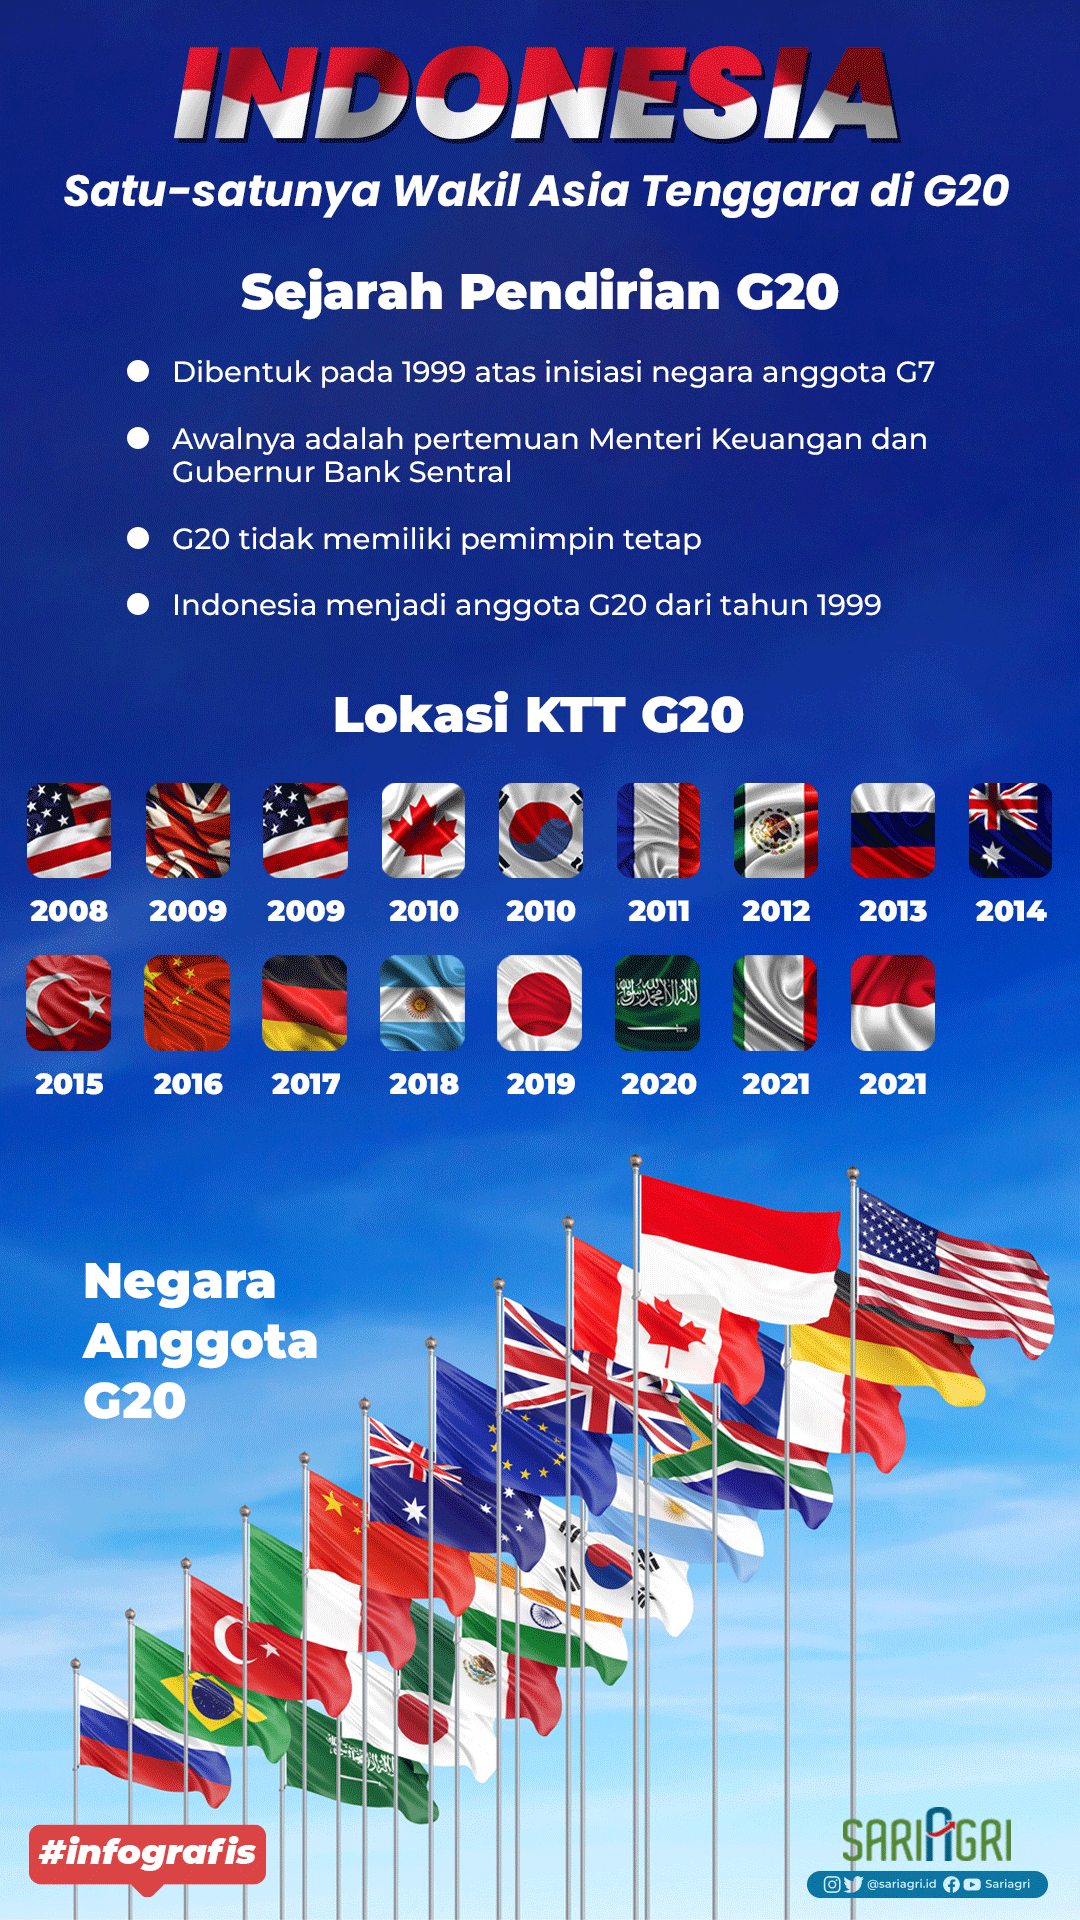 Indonesia Satu-satunya Wakil Asia Tenggara di G20. (Sariagri/Wahidin)